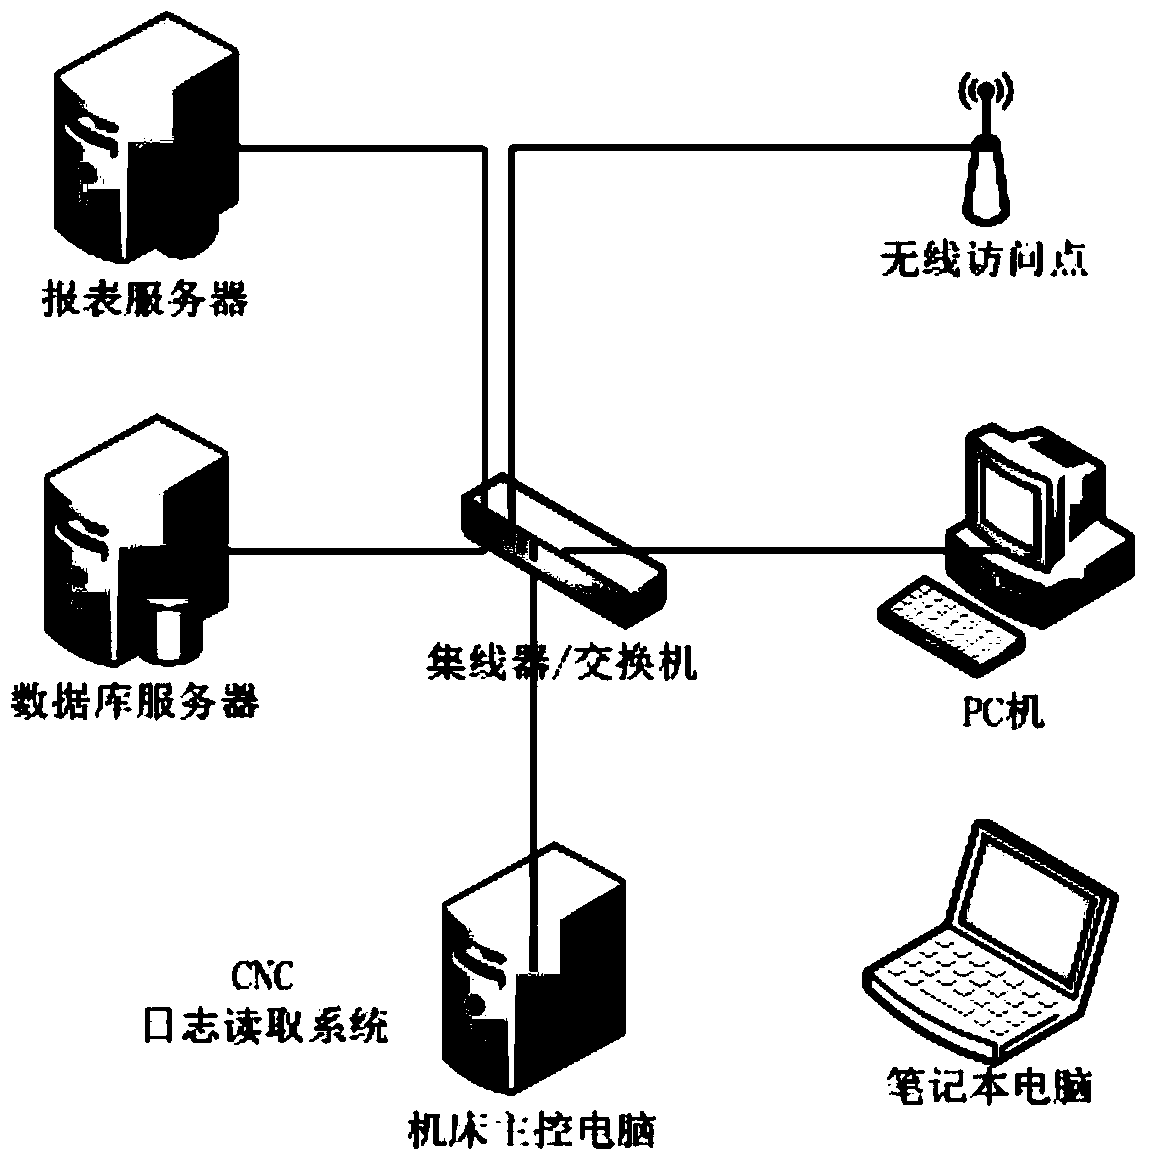 Numerical control machine tool production information obtaining method